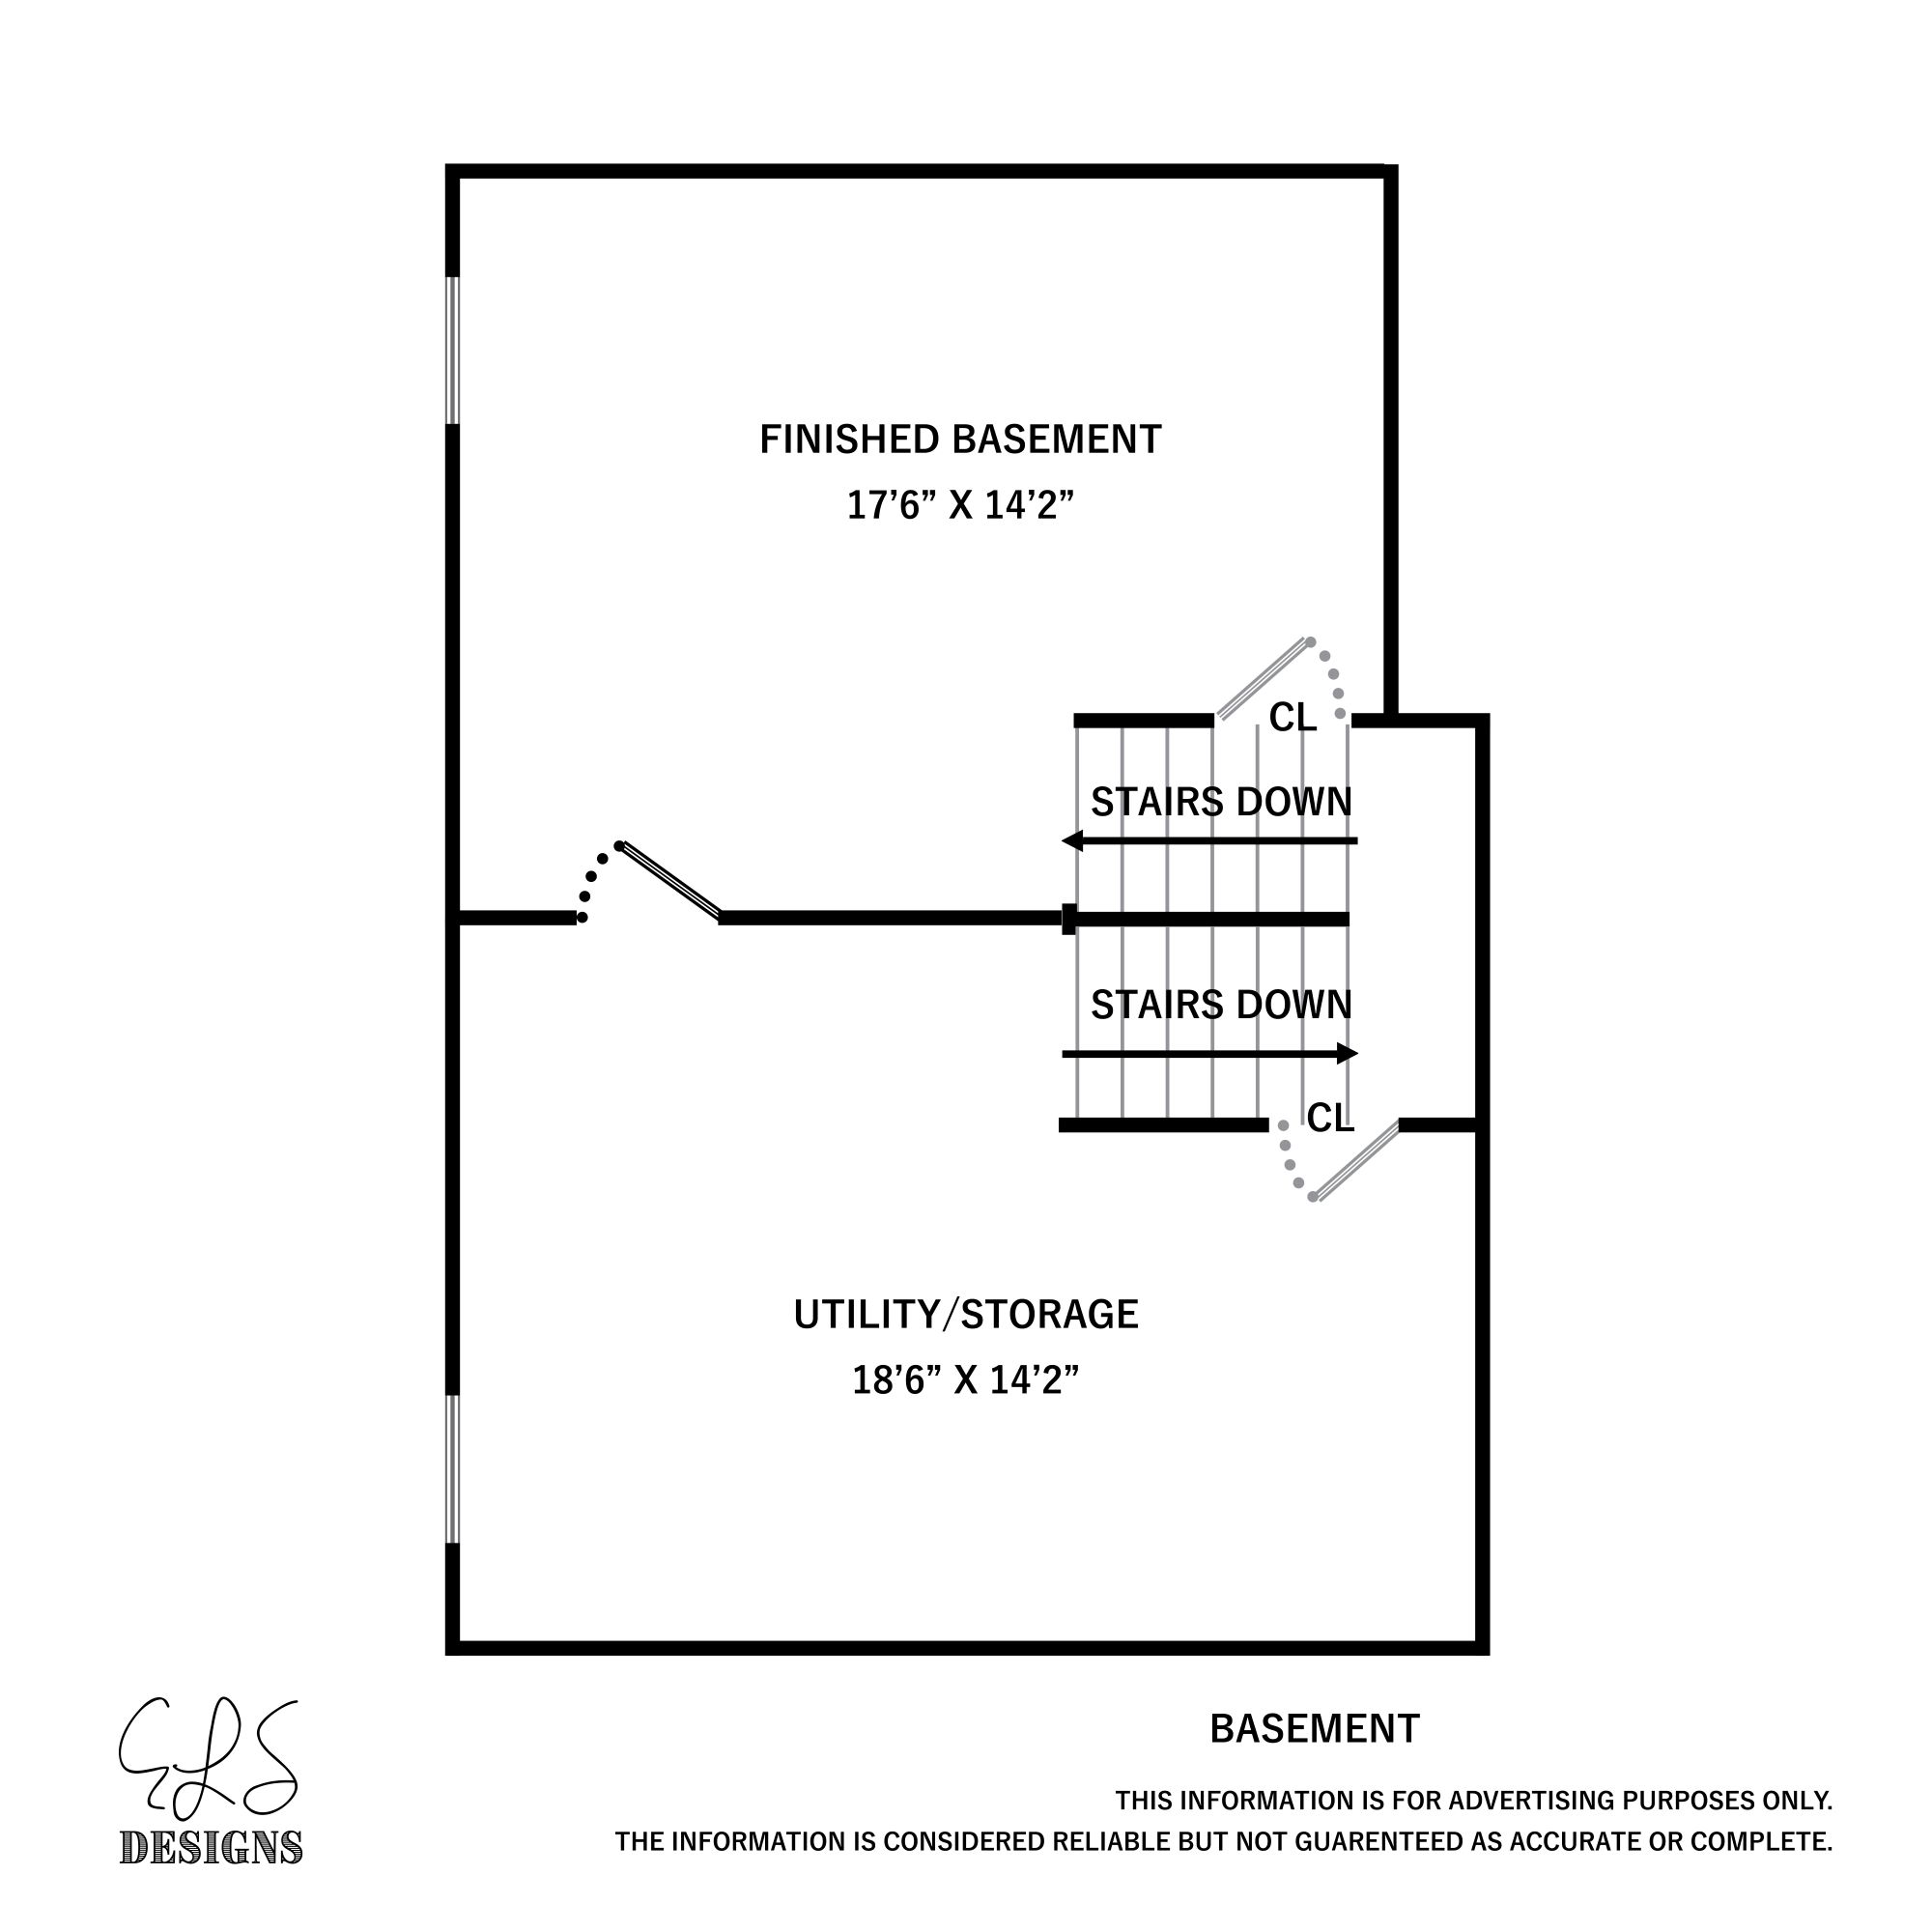 12 Tracey Court Floorplan Basement Reduced.jpg